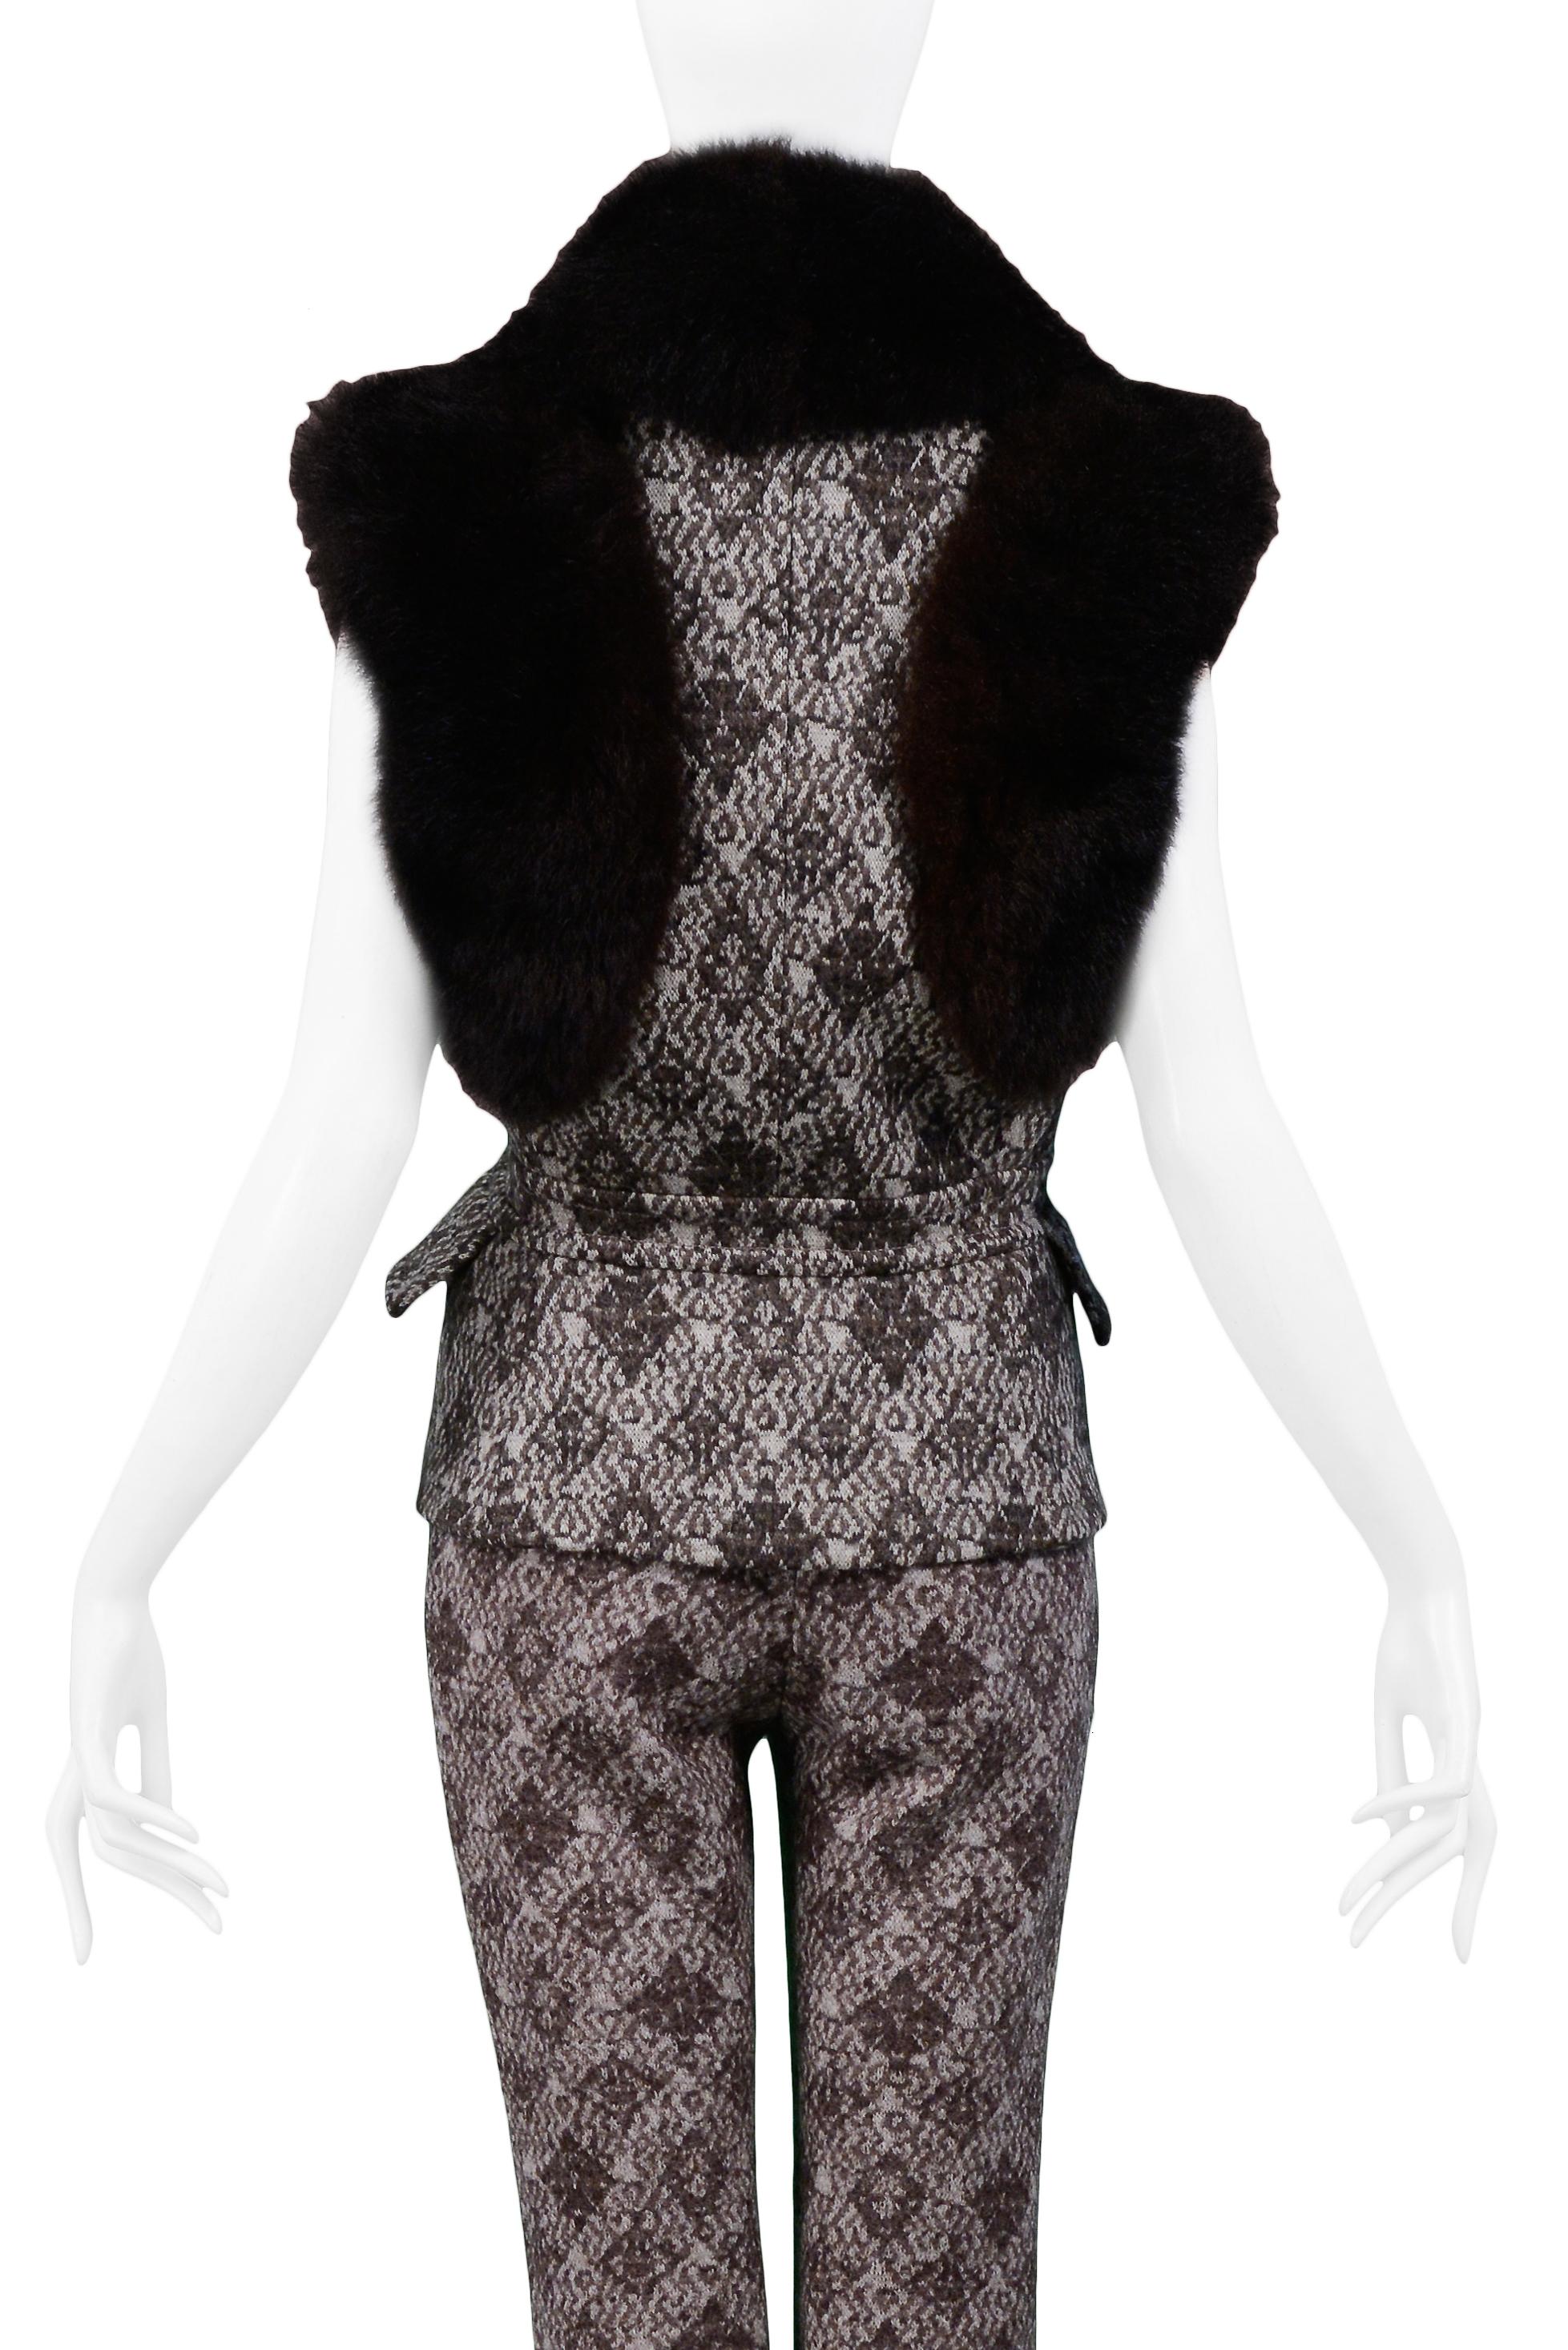 Gianfranco Ferre Brown Fur & Geometric Print Vest and Pants Ensemble 2006 For Sale 3